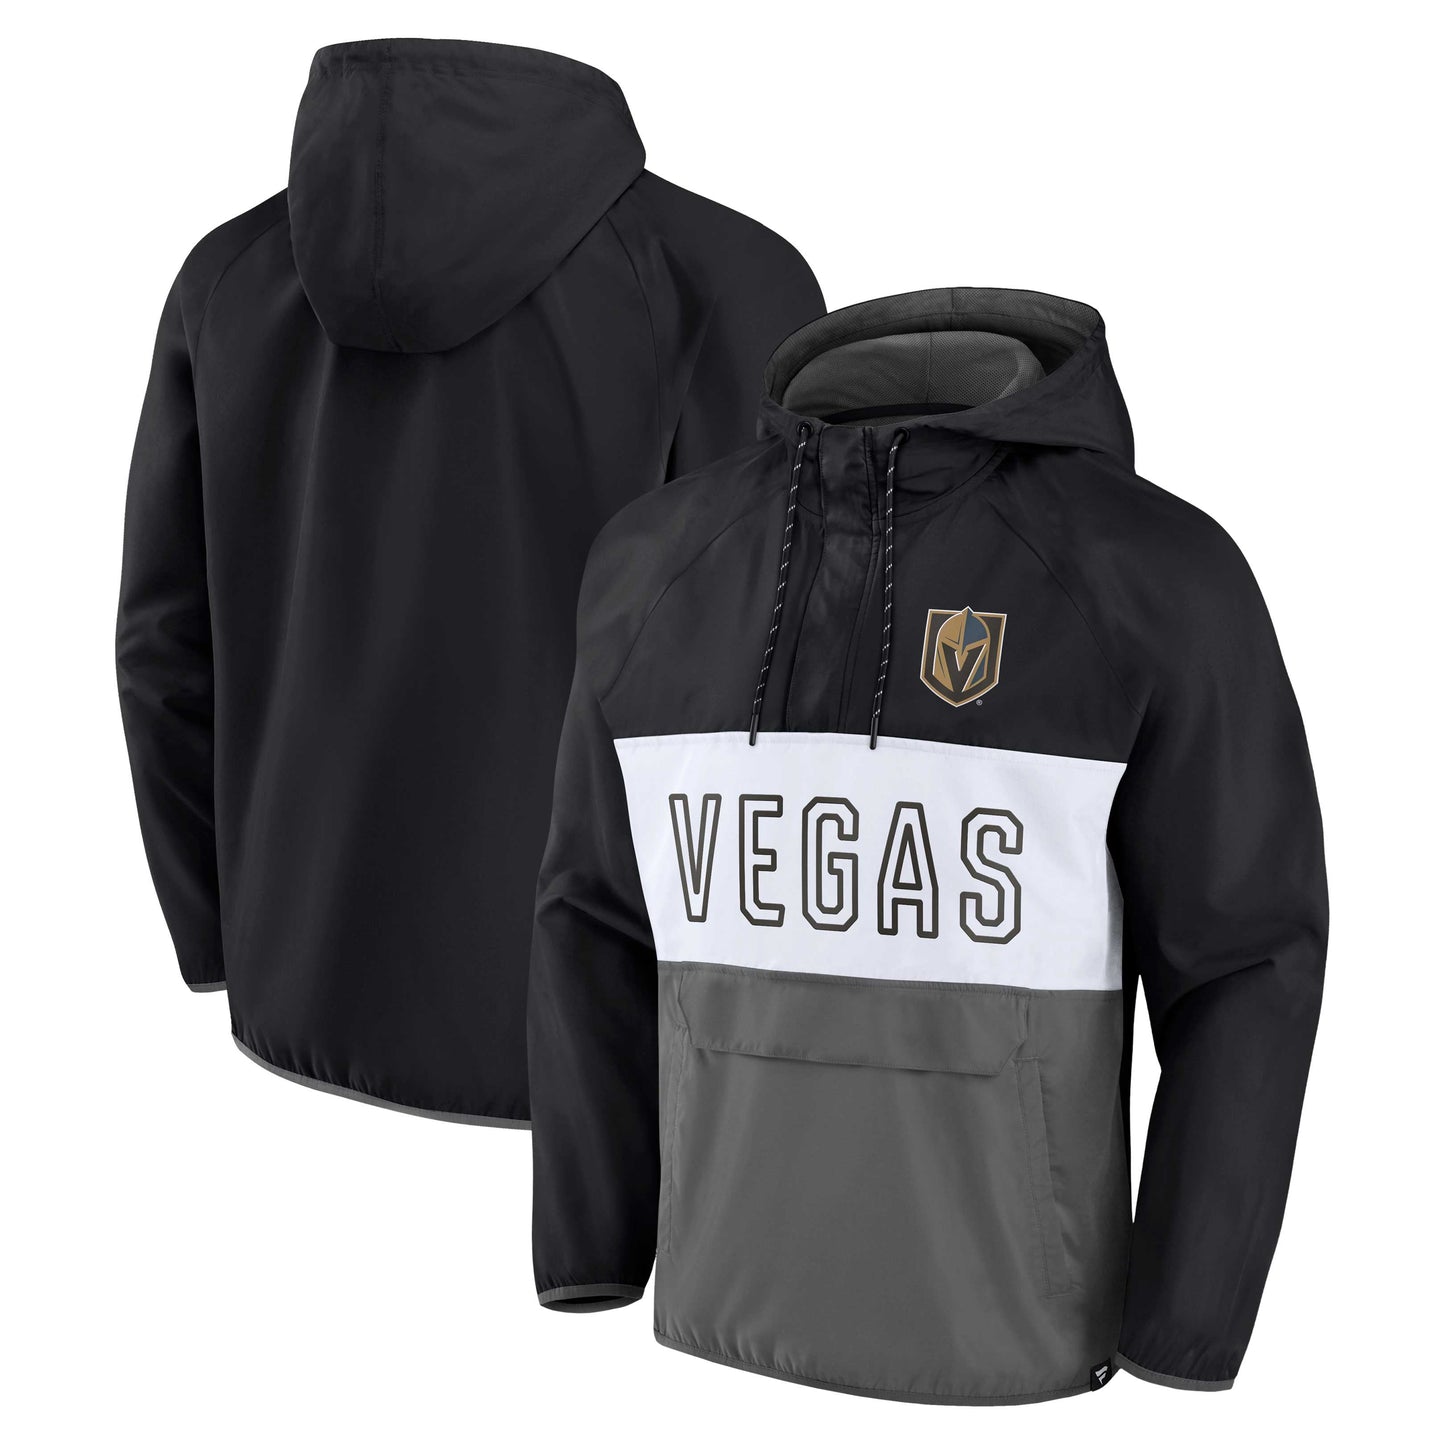 Men's Fanatics Branded Black/Gray Vegas Golden Knights Backhand Shooter Defender Anorak Raglan Hoodie Quarter-Zip Jacket